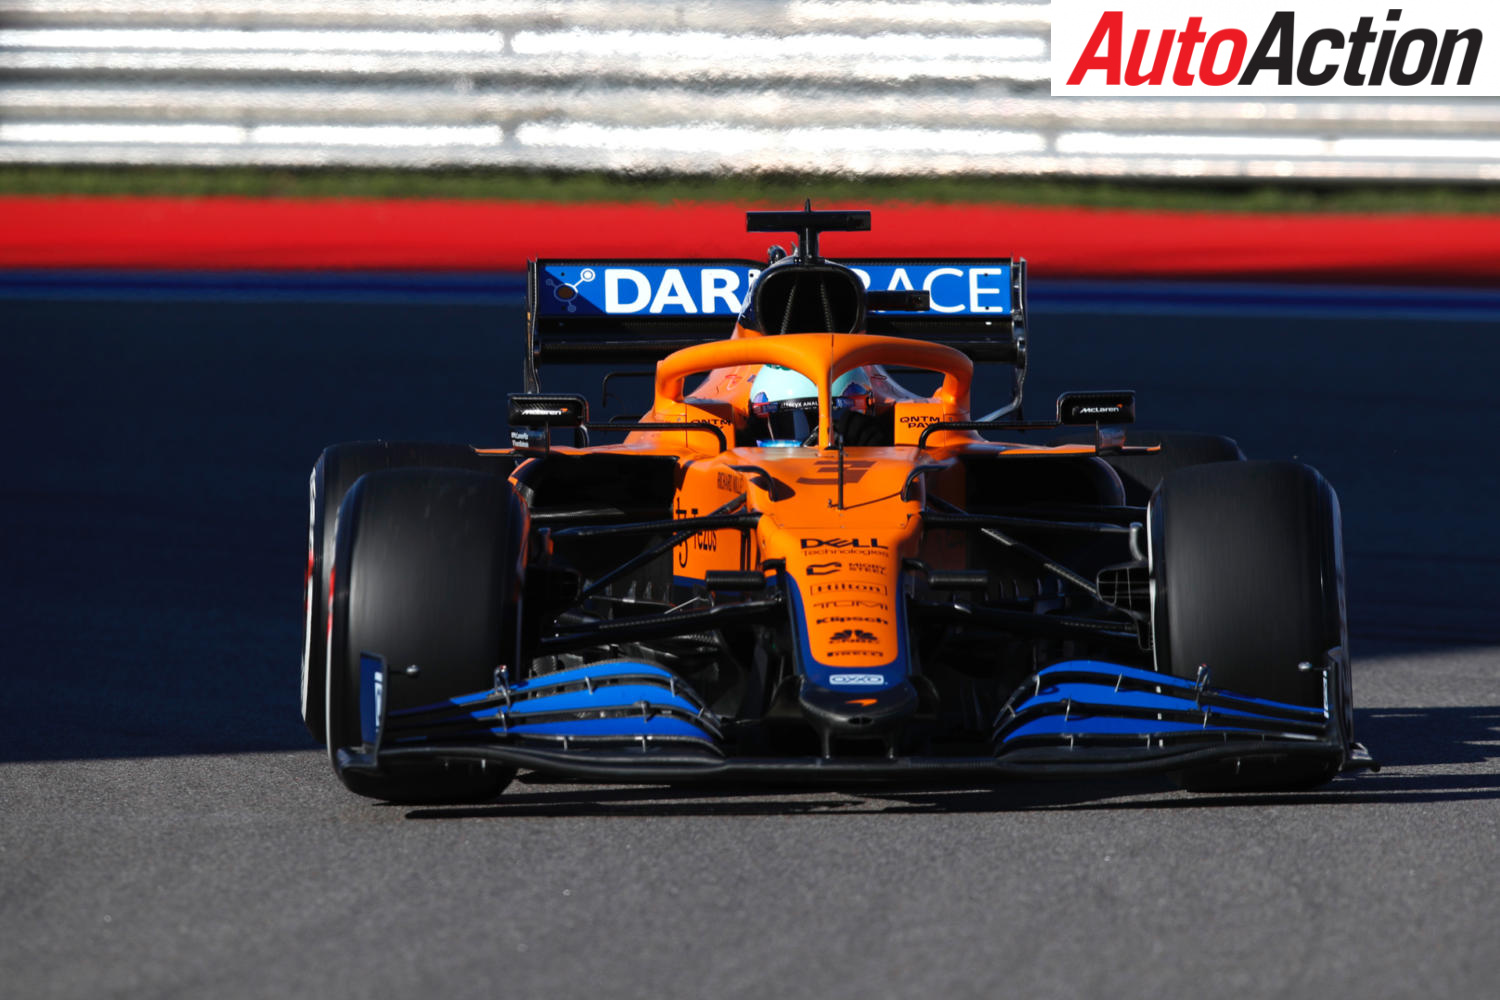 Engine swap hampers Daniel Ricciardo - Image: Motorsport Images